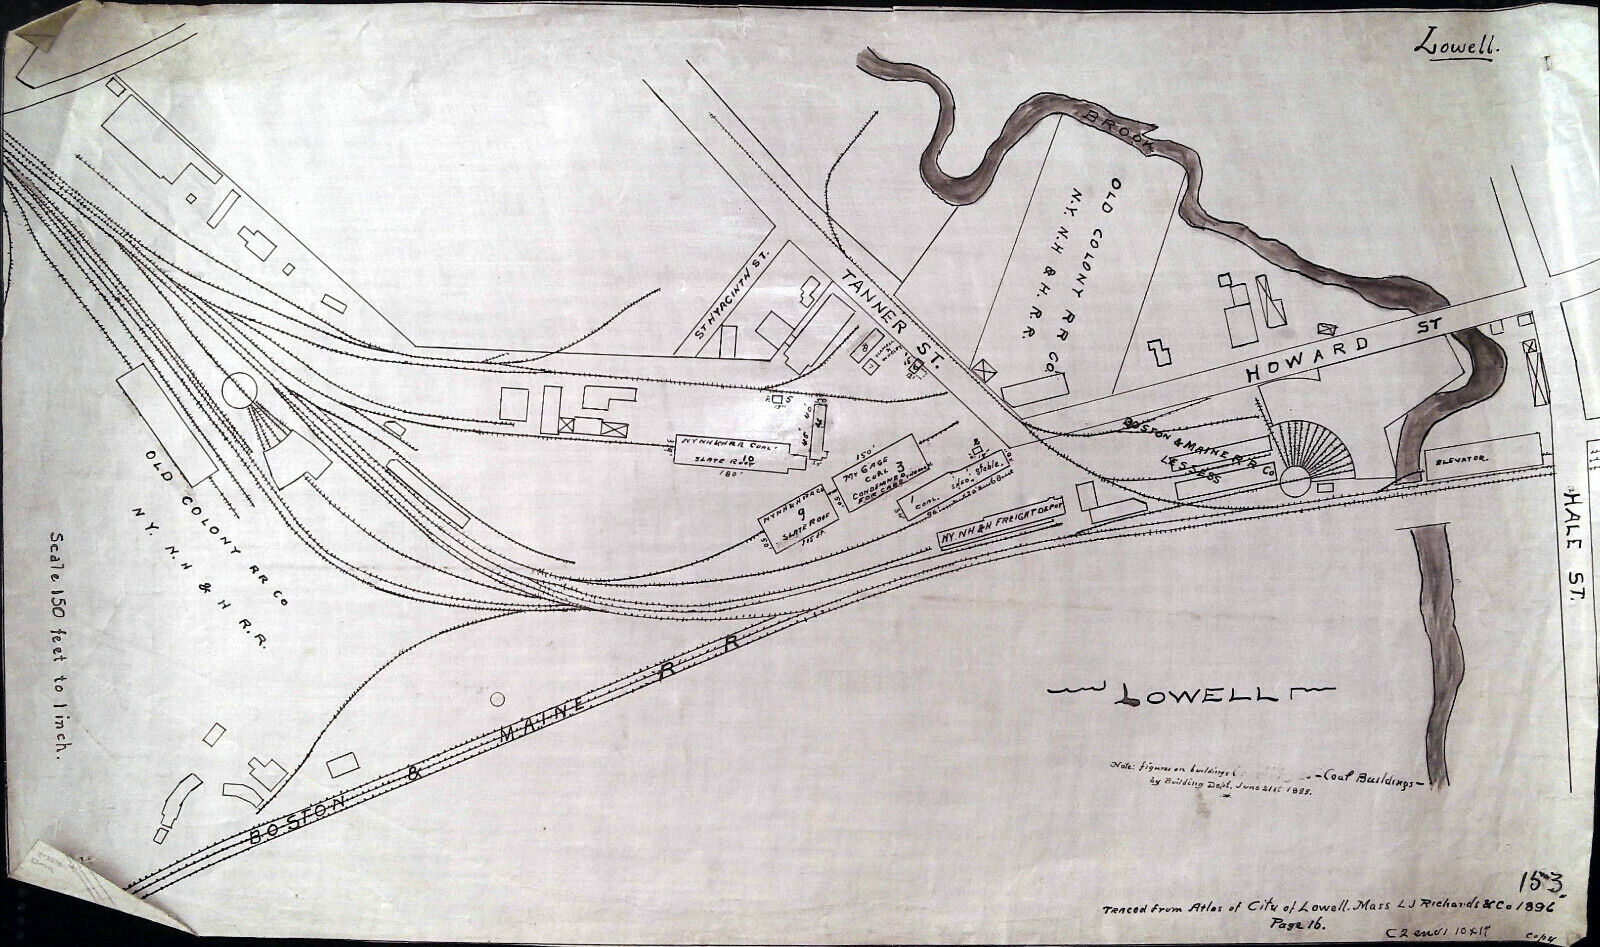 NYNH&HRR Lowell Yard Plan on Vellum 1898